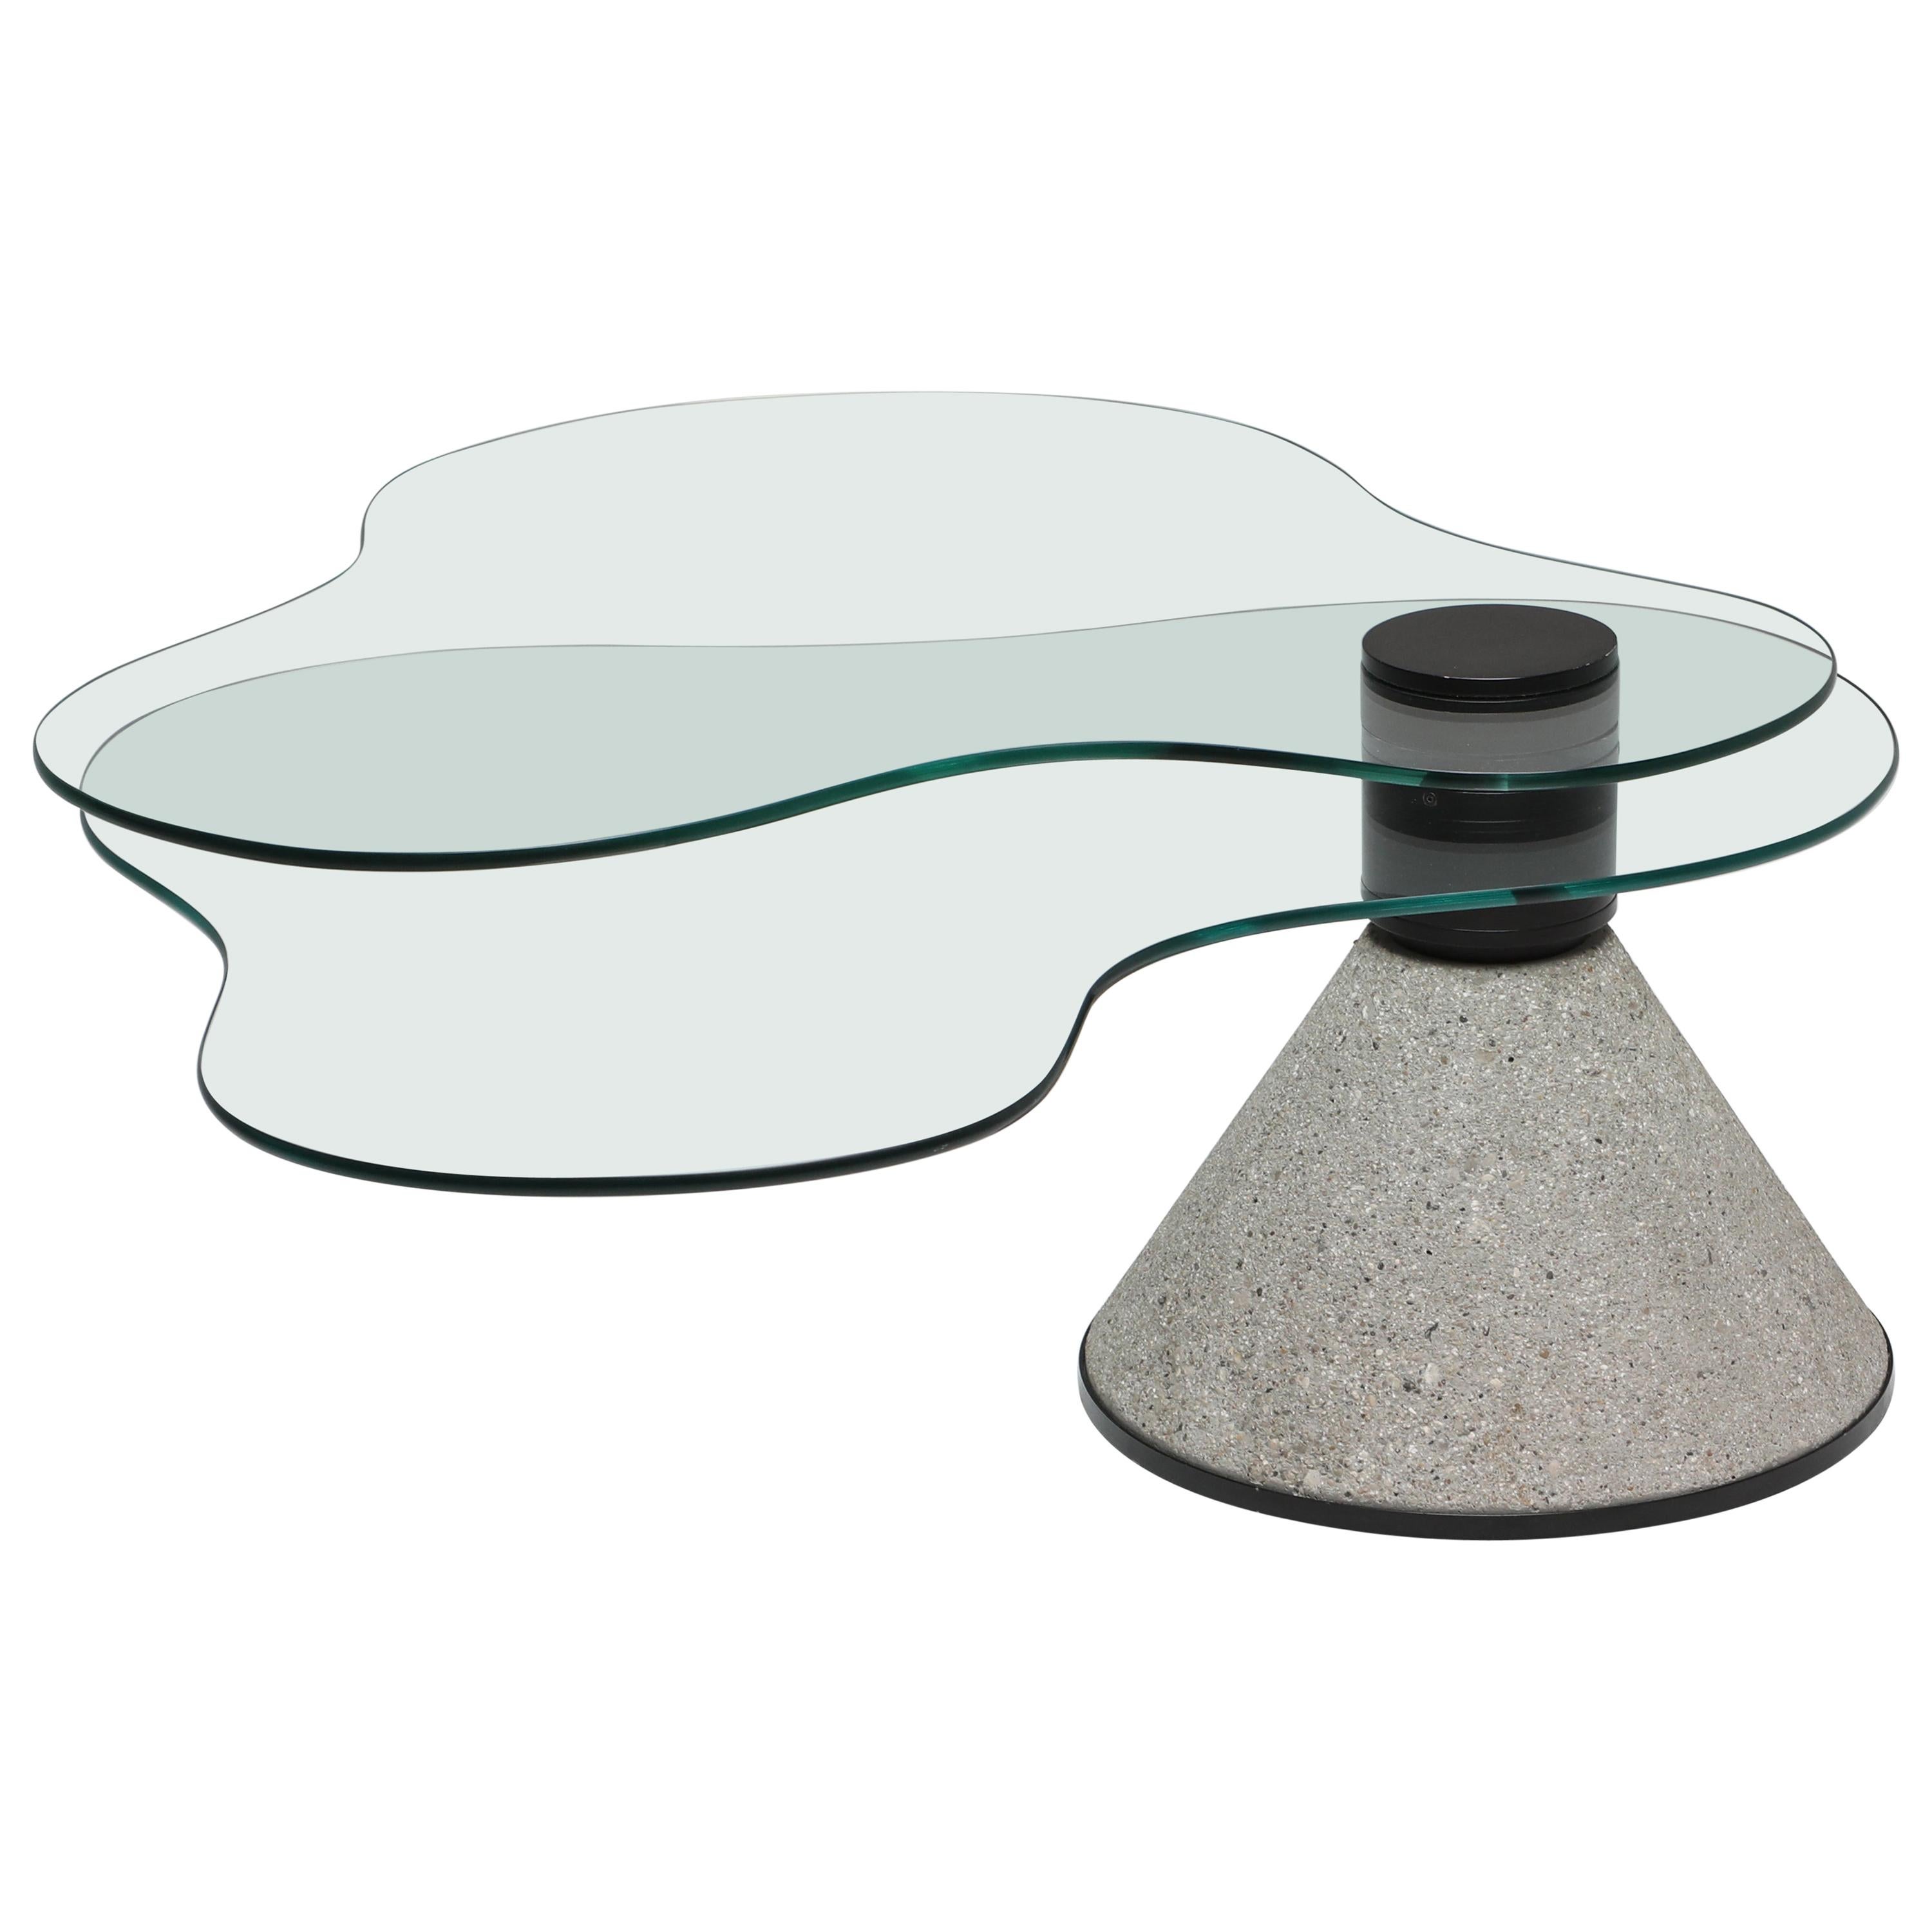 Saporiti Concrete and Glass Postmodern Coffee Table